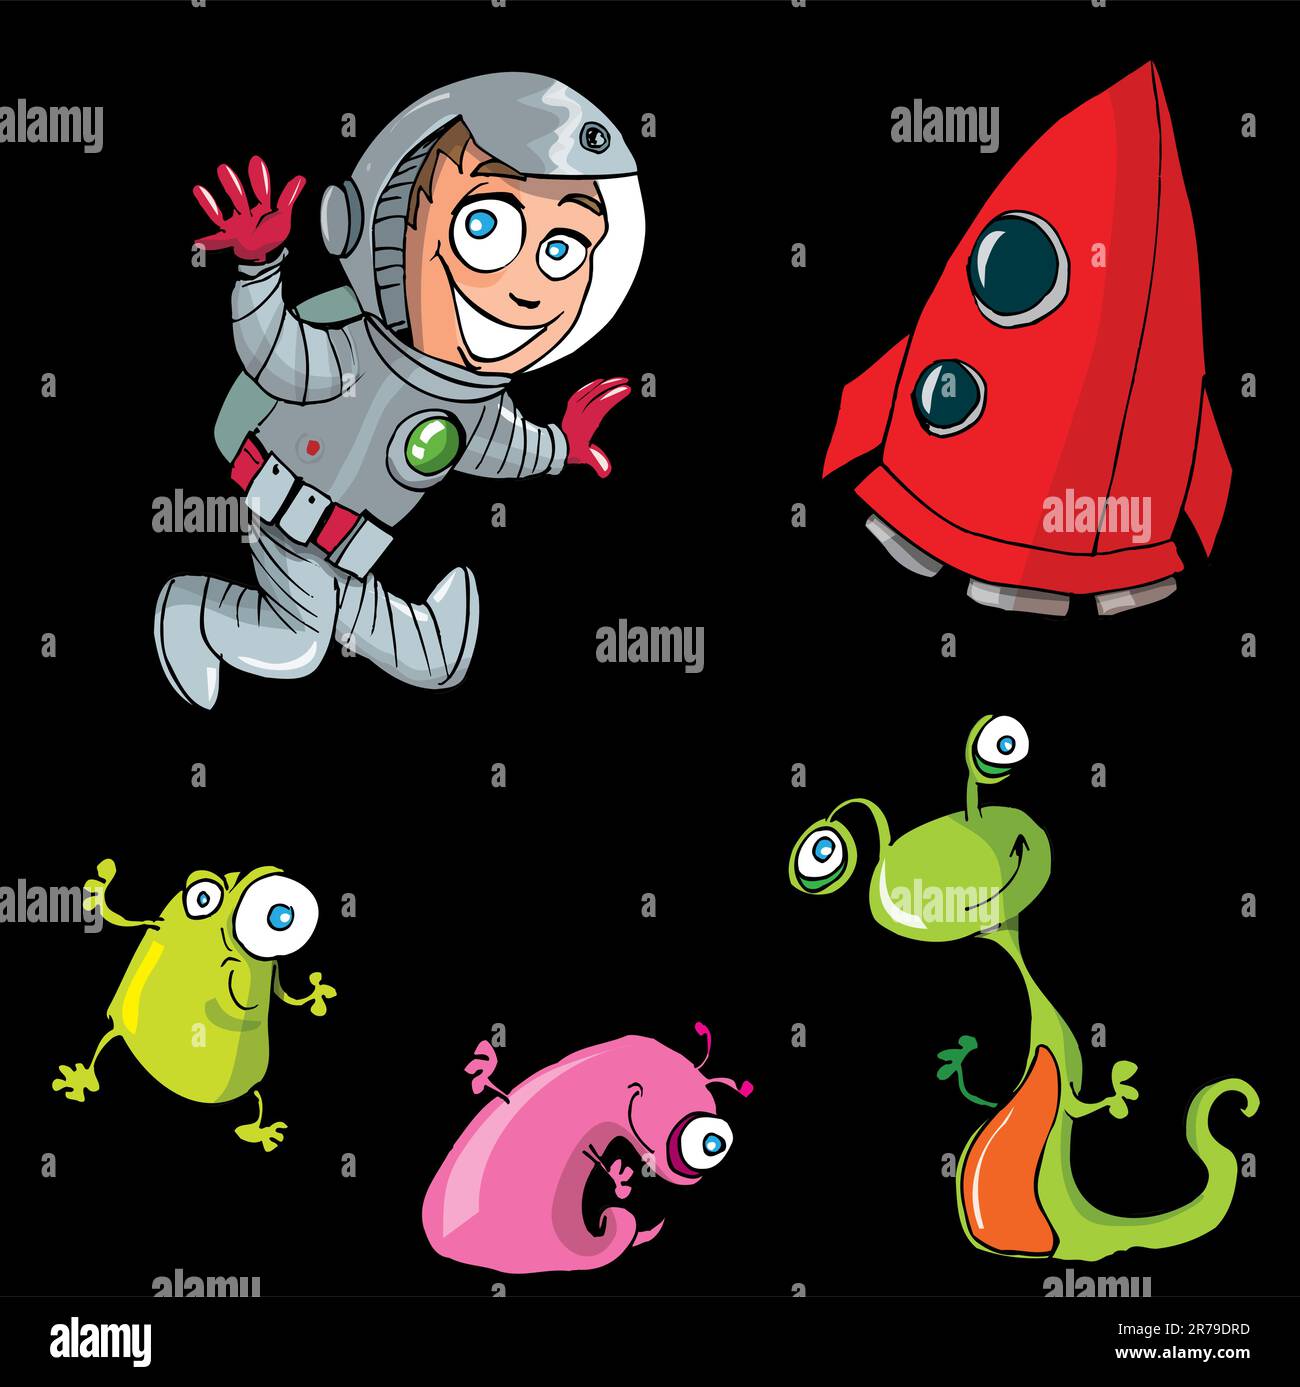 Cartoon aliens Immagini Vettoriali Stock - Pagina 2 - Alamy